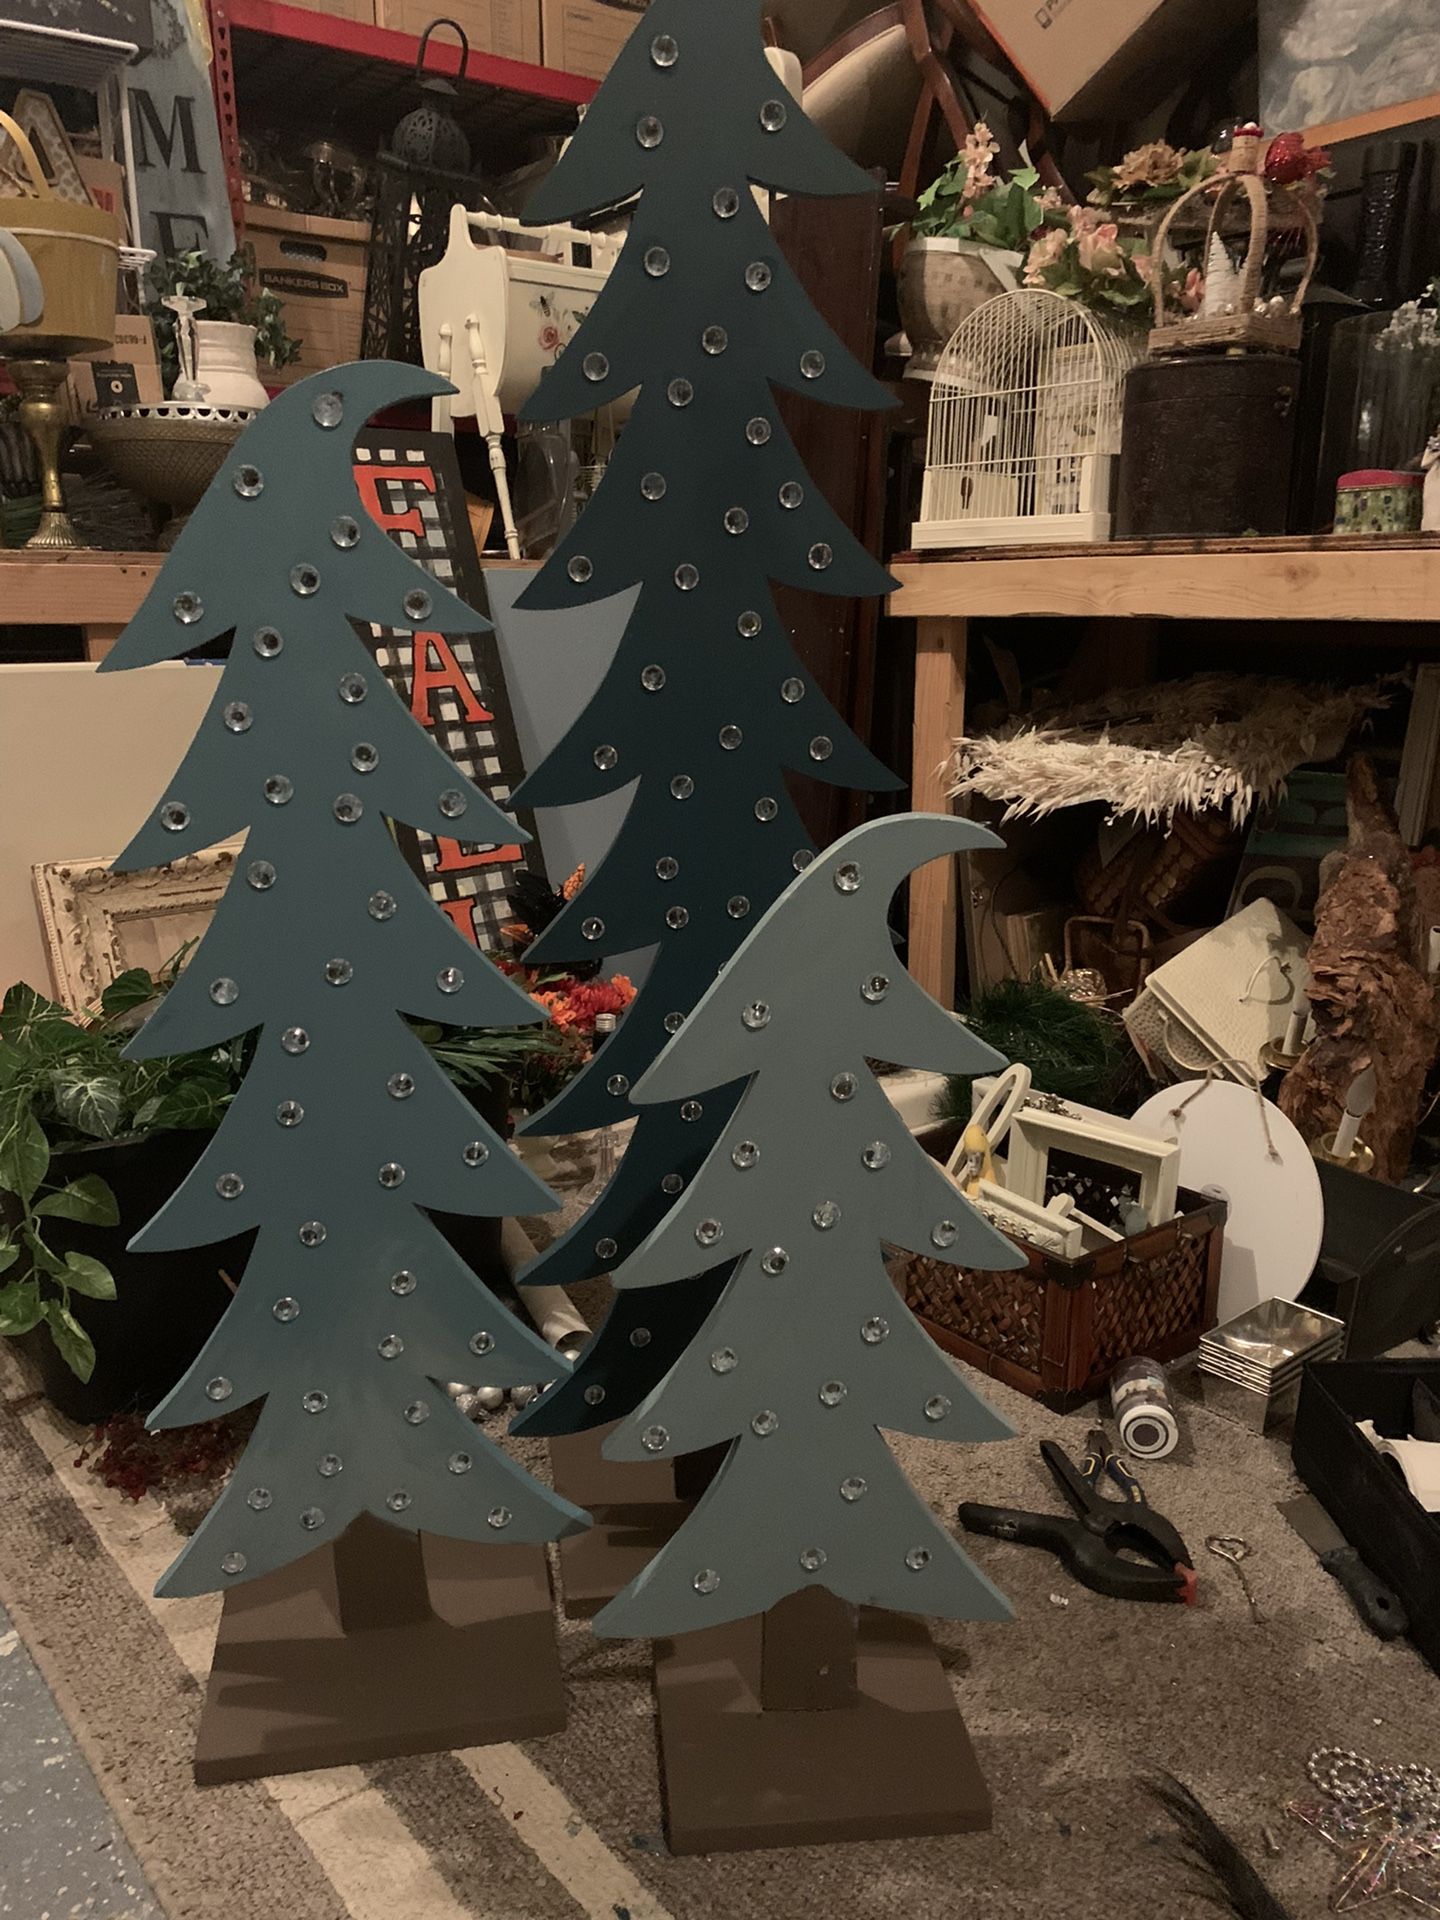 Three Handmade Christmas trees with crystals $20